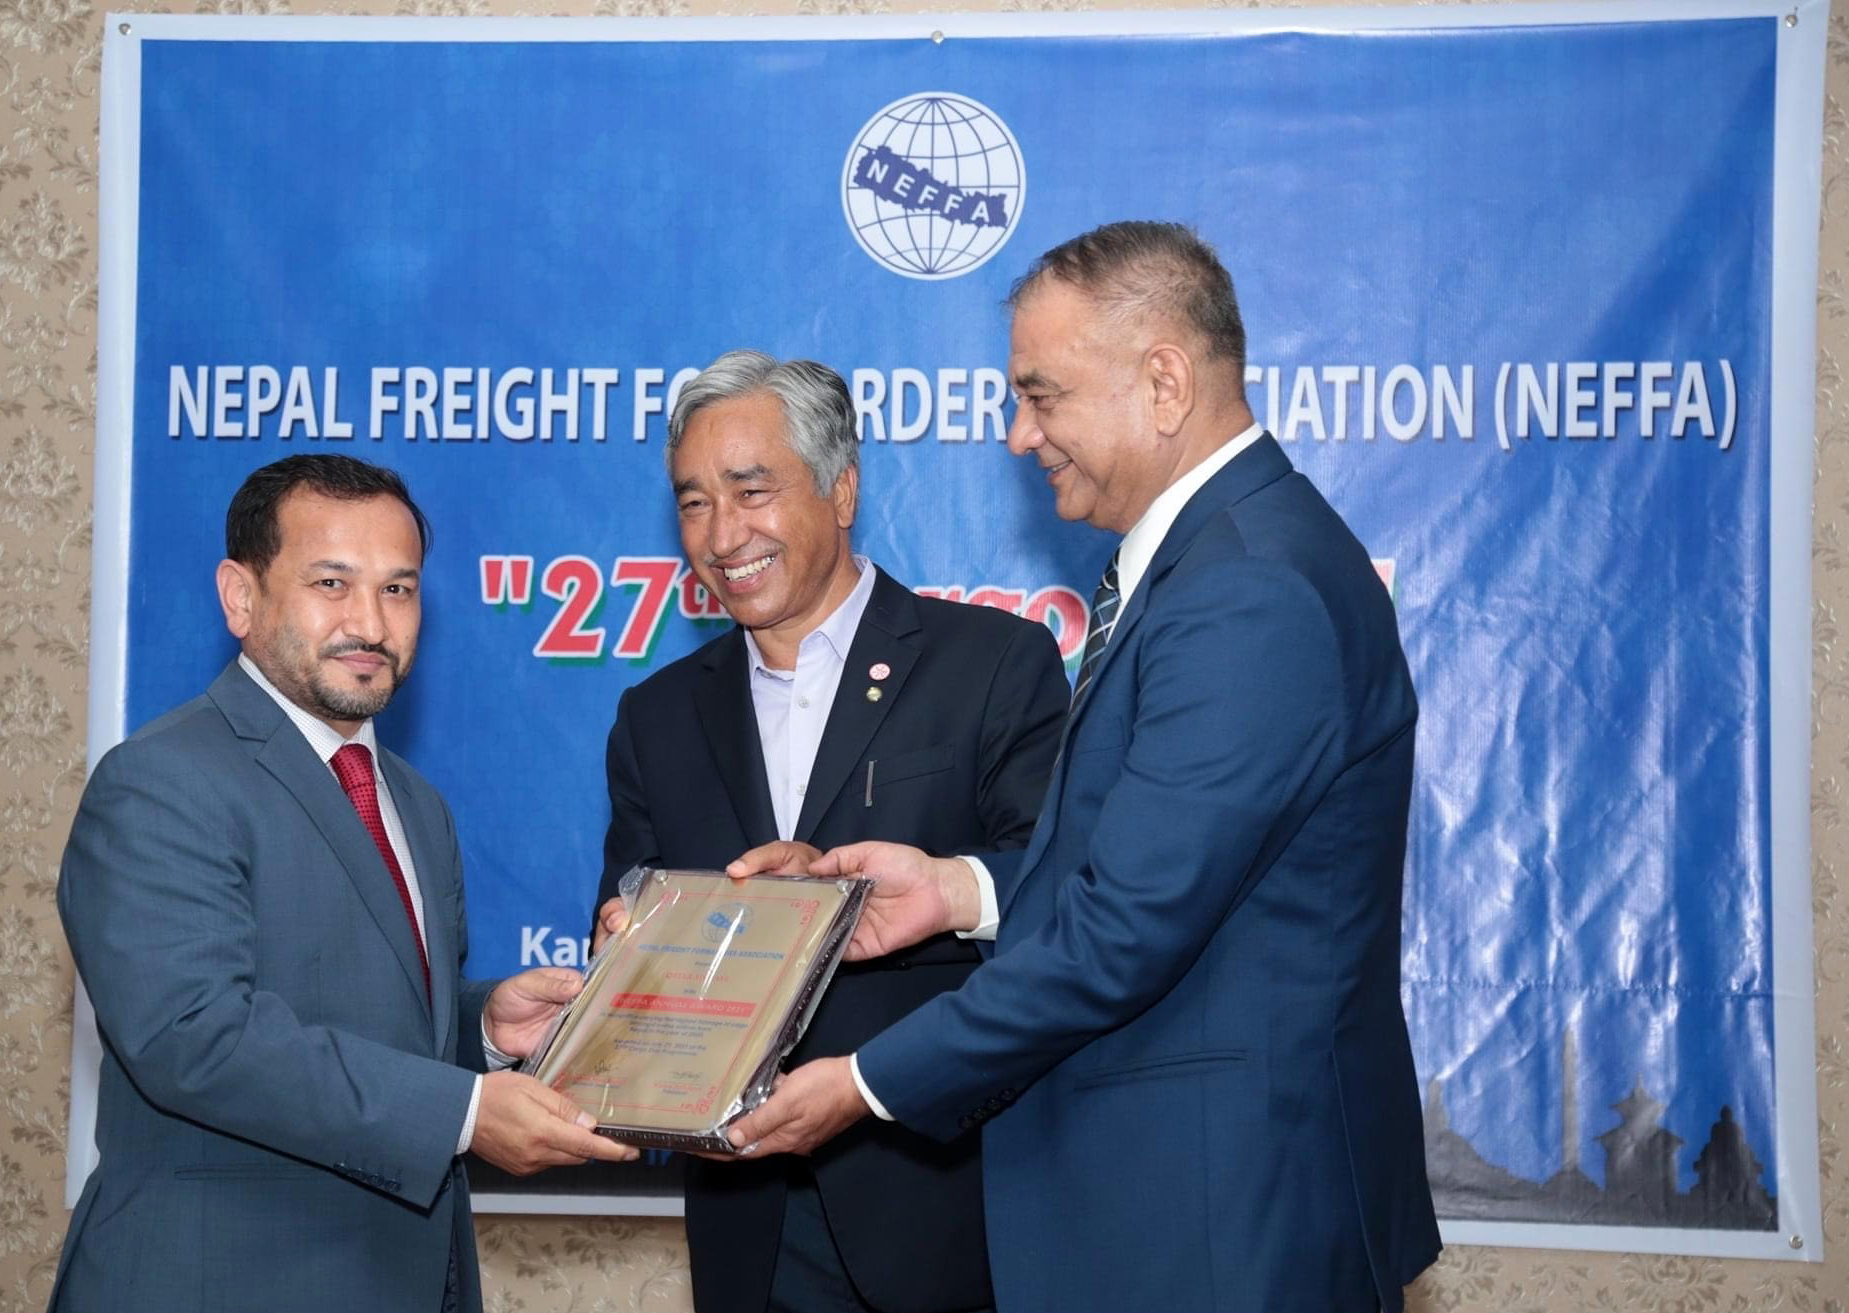 Qatar Airways Cargo receives award for highest cargo uplift from Nepal